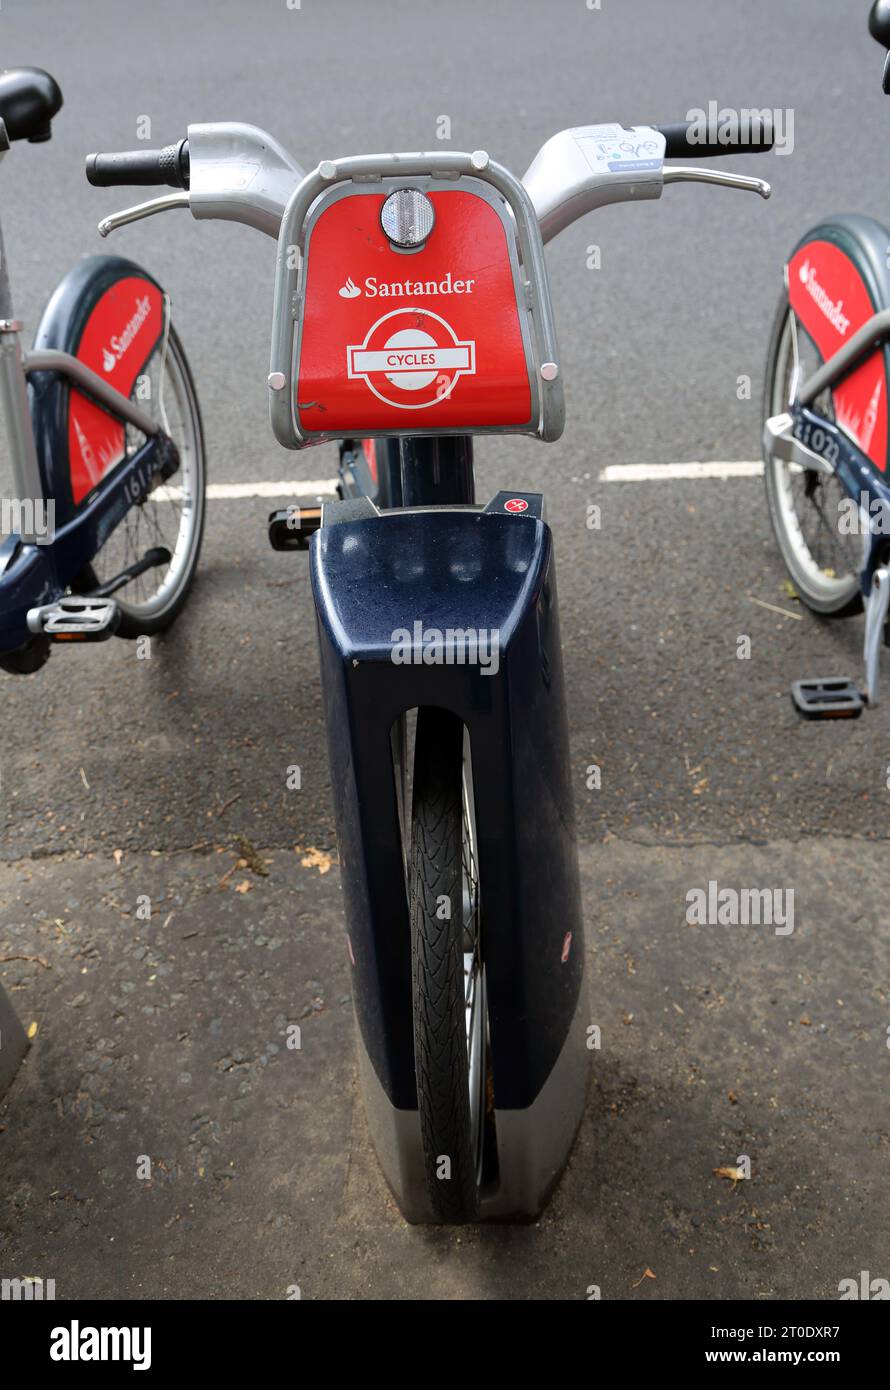 Santander Cycles Public Bicycle Hire Scheme Docking Chelsea Londres Inglaterra Foto de stock